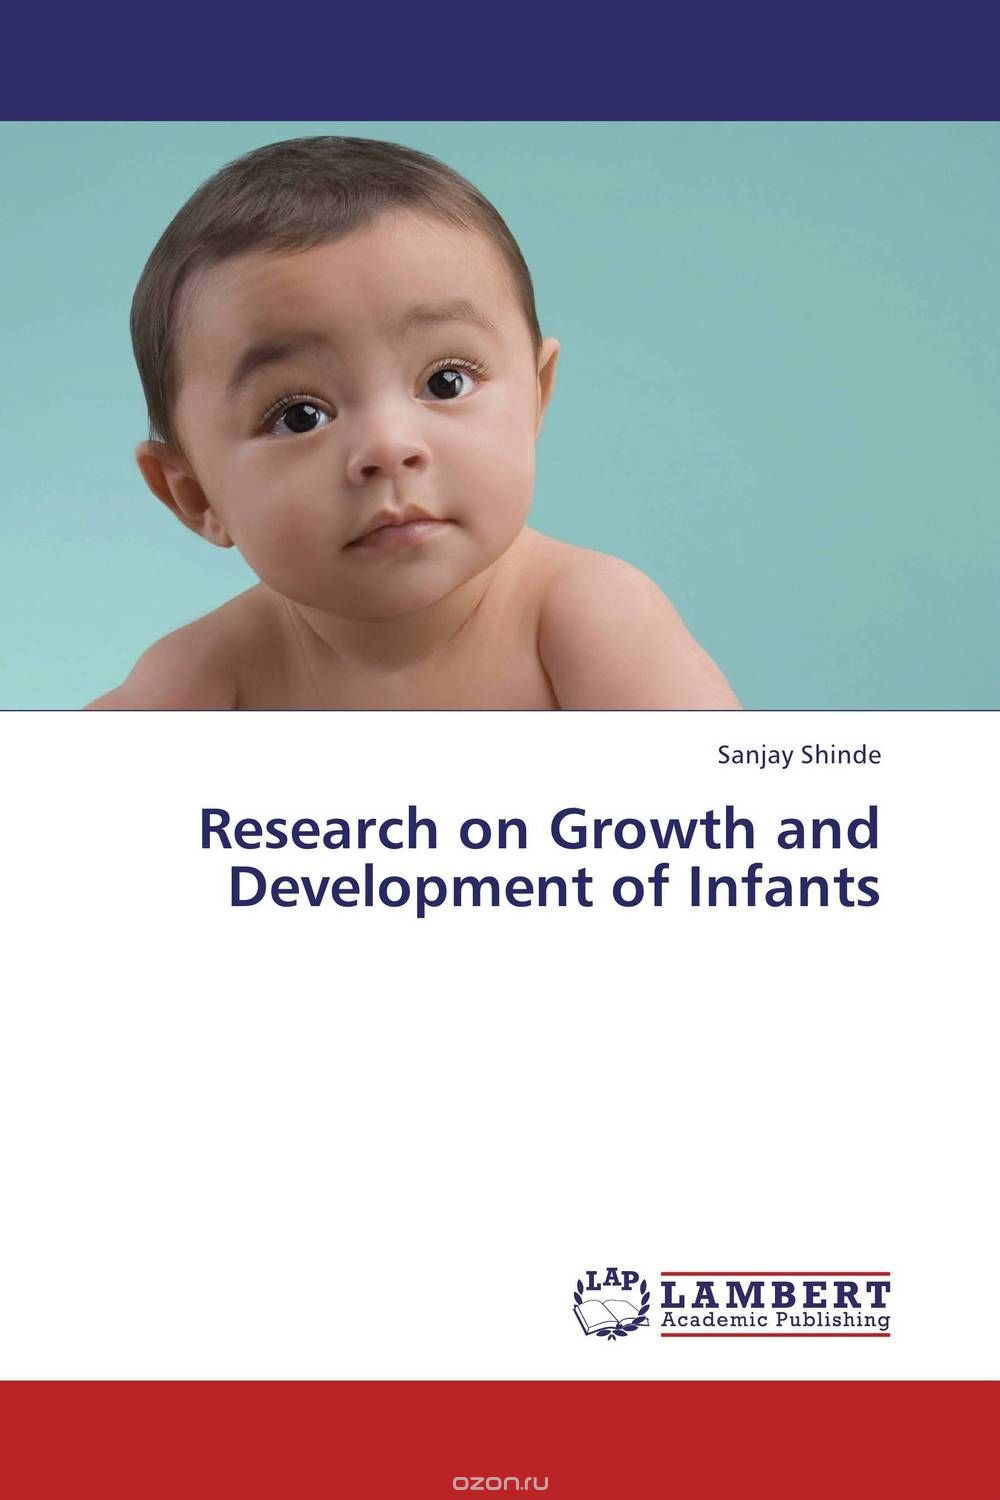 Скачать книгу "Research on Growth and Development of Infants"